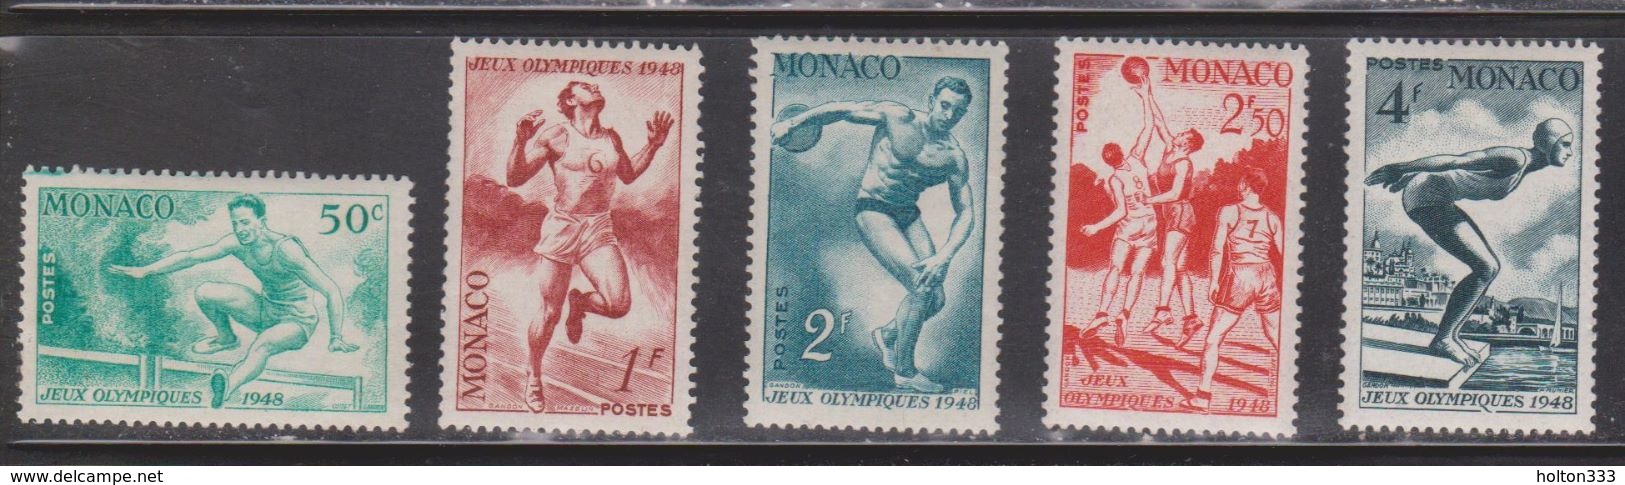 MONACO Scott # 204-8 MNH - Olympic Games 1948 - Nuovi